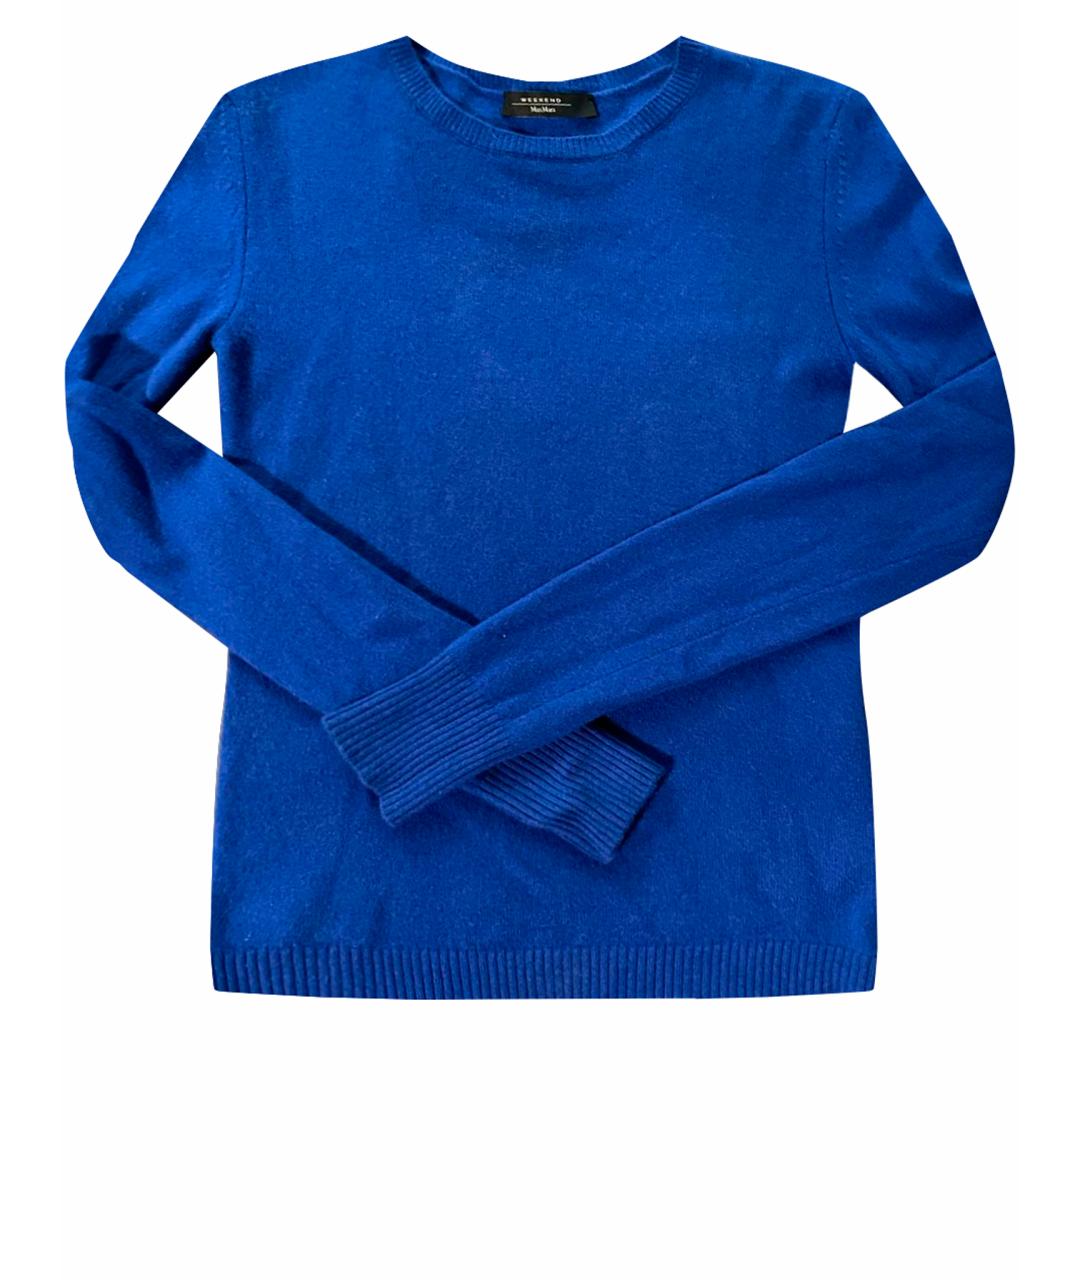 WEEKEND MAX MARA Синий шерстяной джемпер / свитер, фото 1